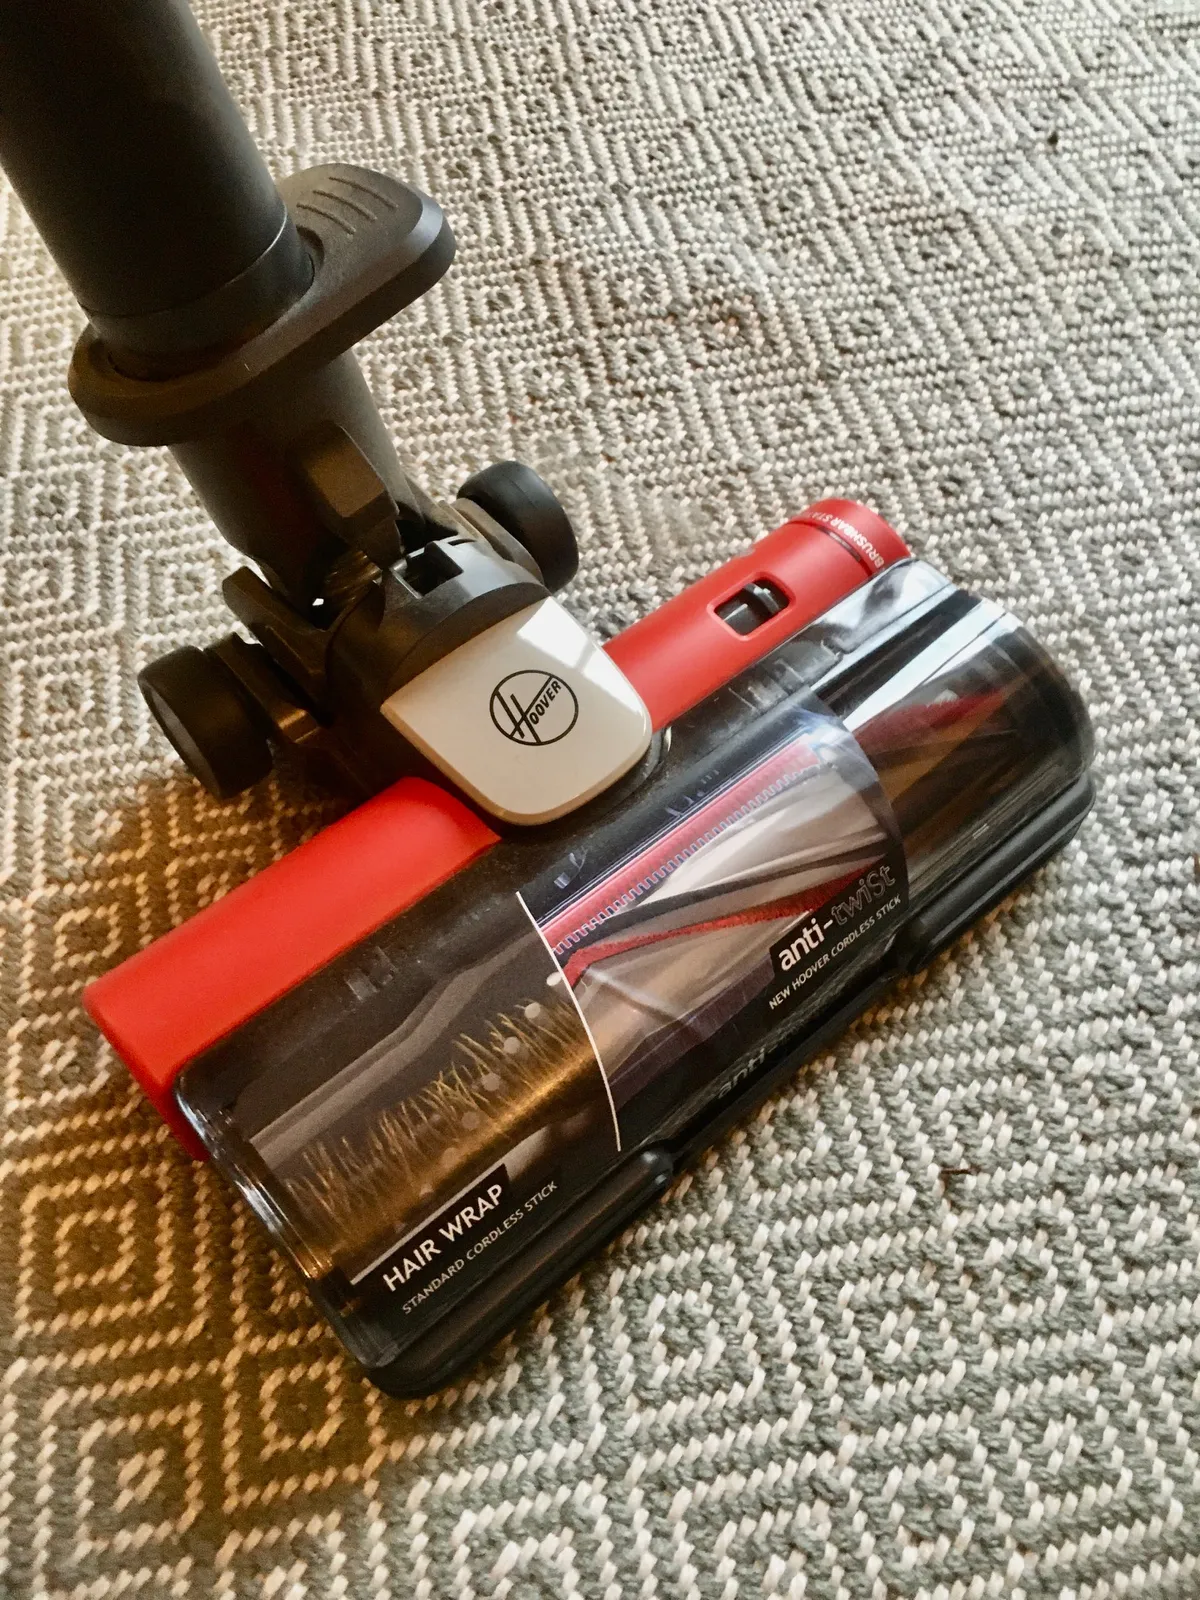 HF9 Home Edition cordless stick vacuum